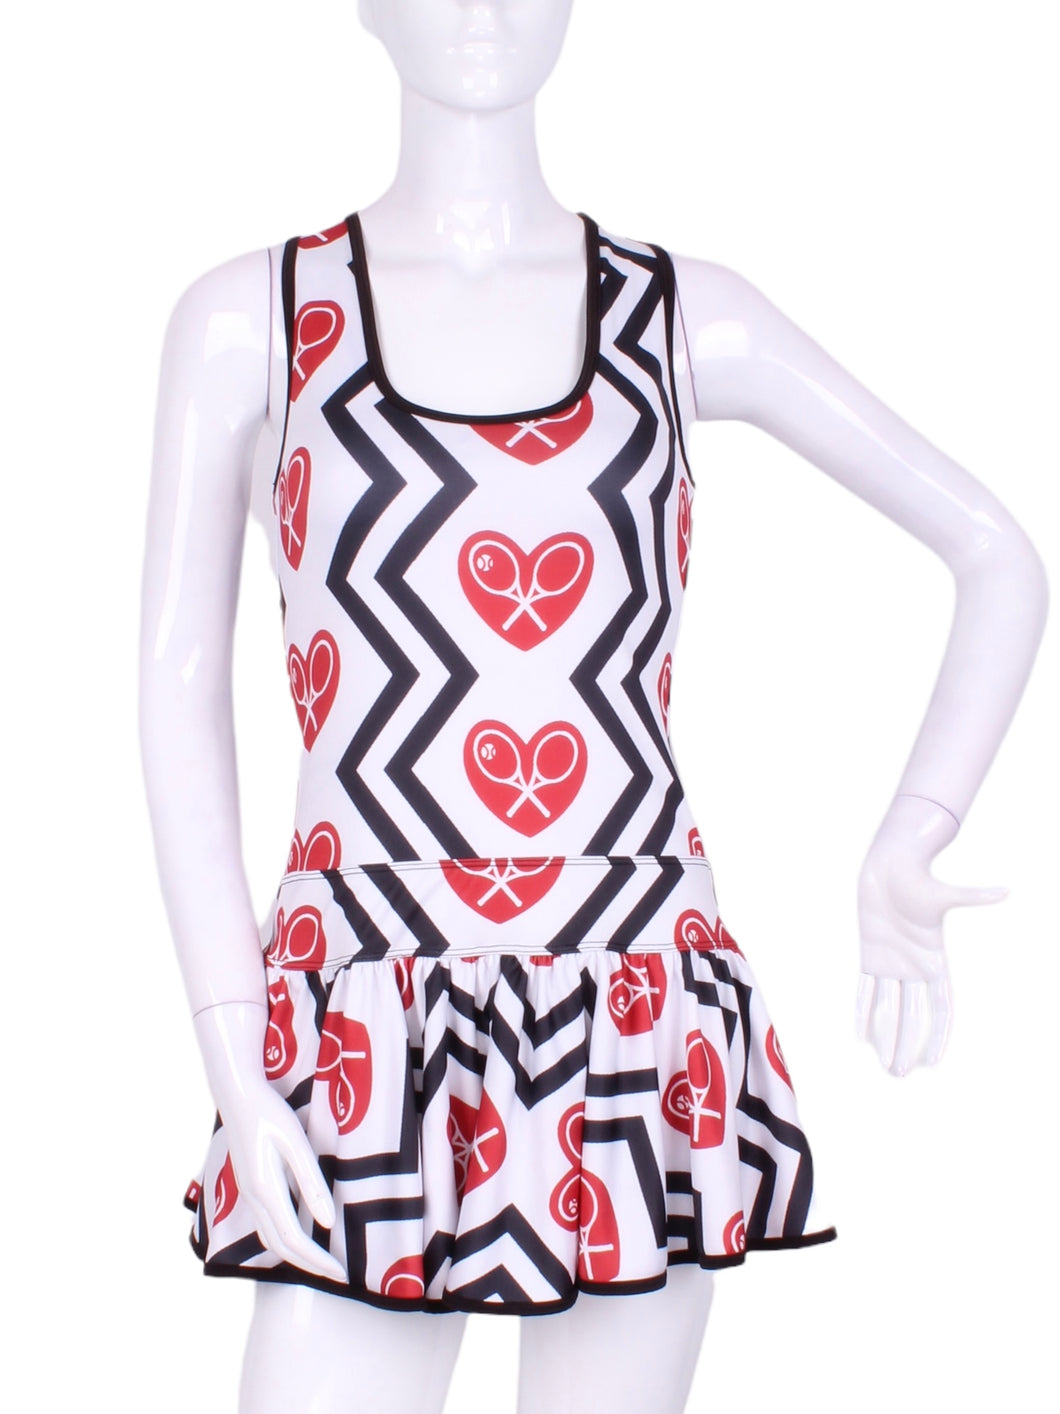 Zig Zag Sandra Dee Tennis Dress - I LOVE MY DOUBLES PARTNER!!!